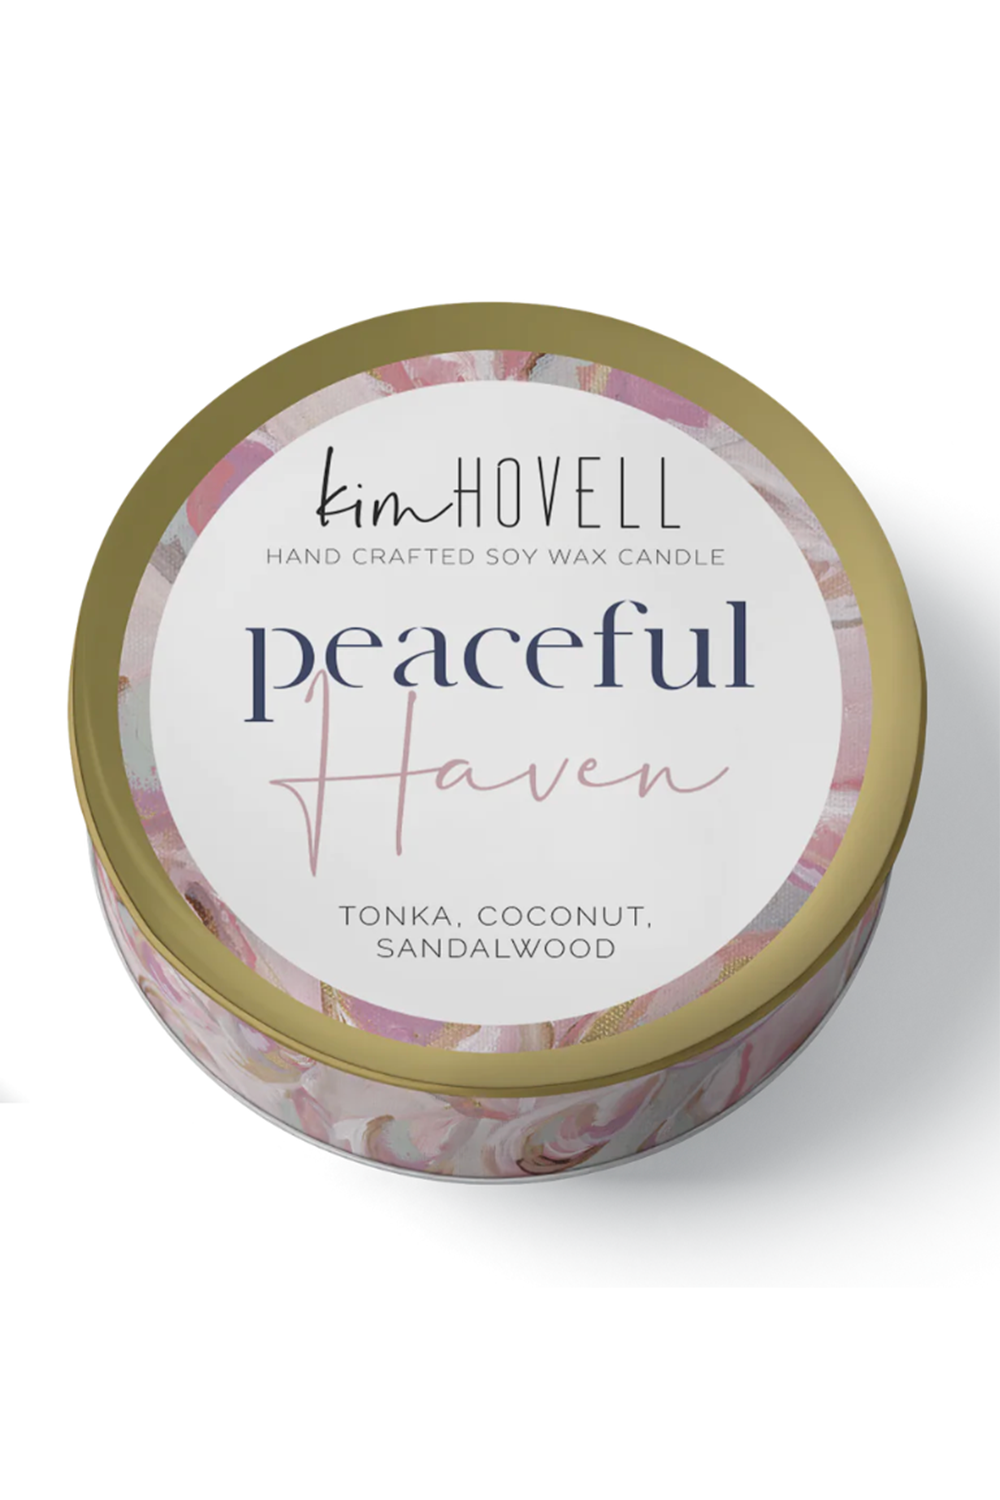 Kim Hovell + Annapolis Mini Tin Candle - Haven